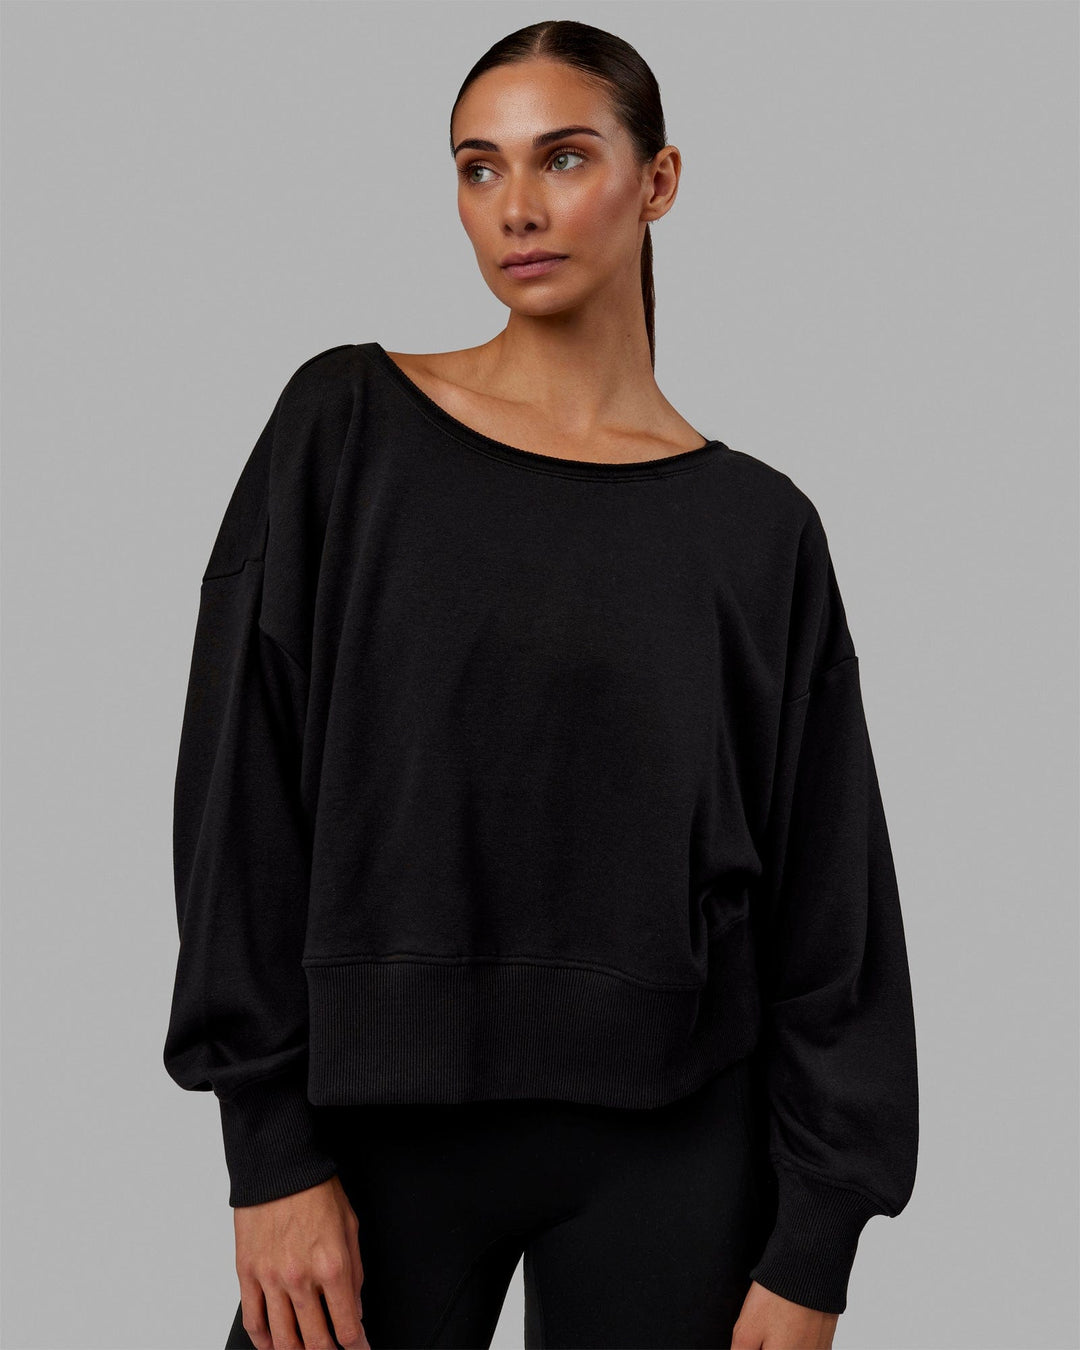 Woman wearing Tempo Sweater - Black